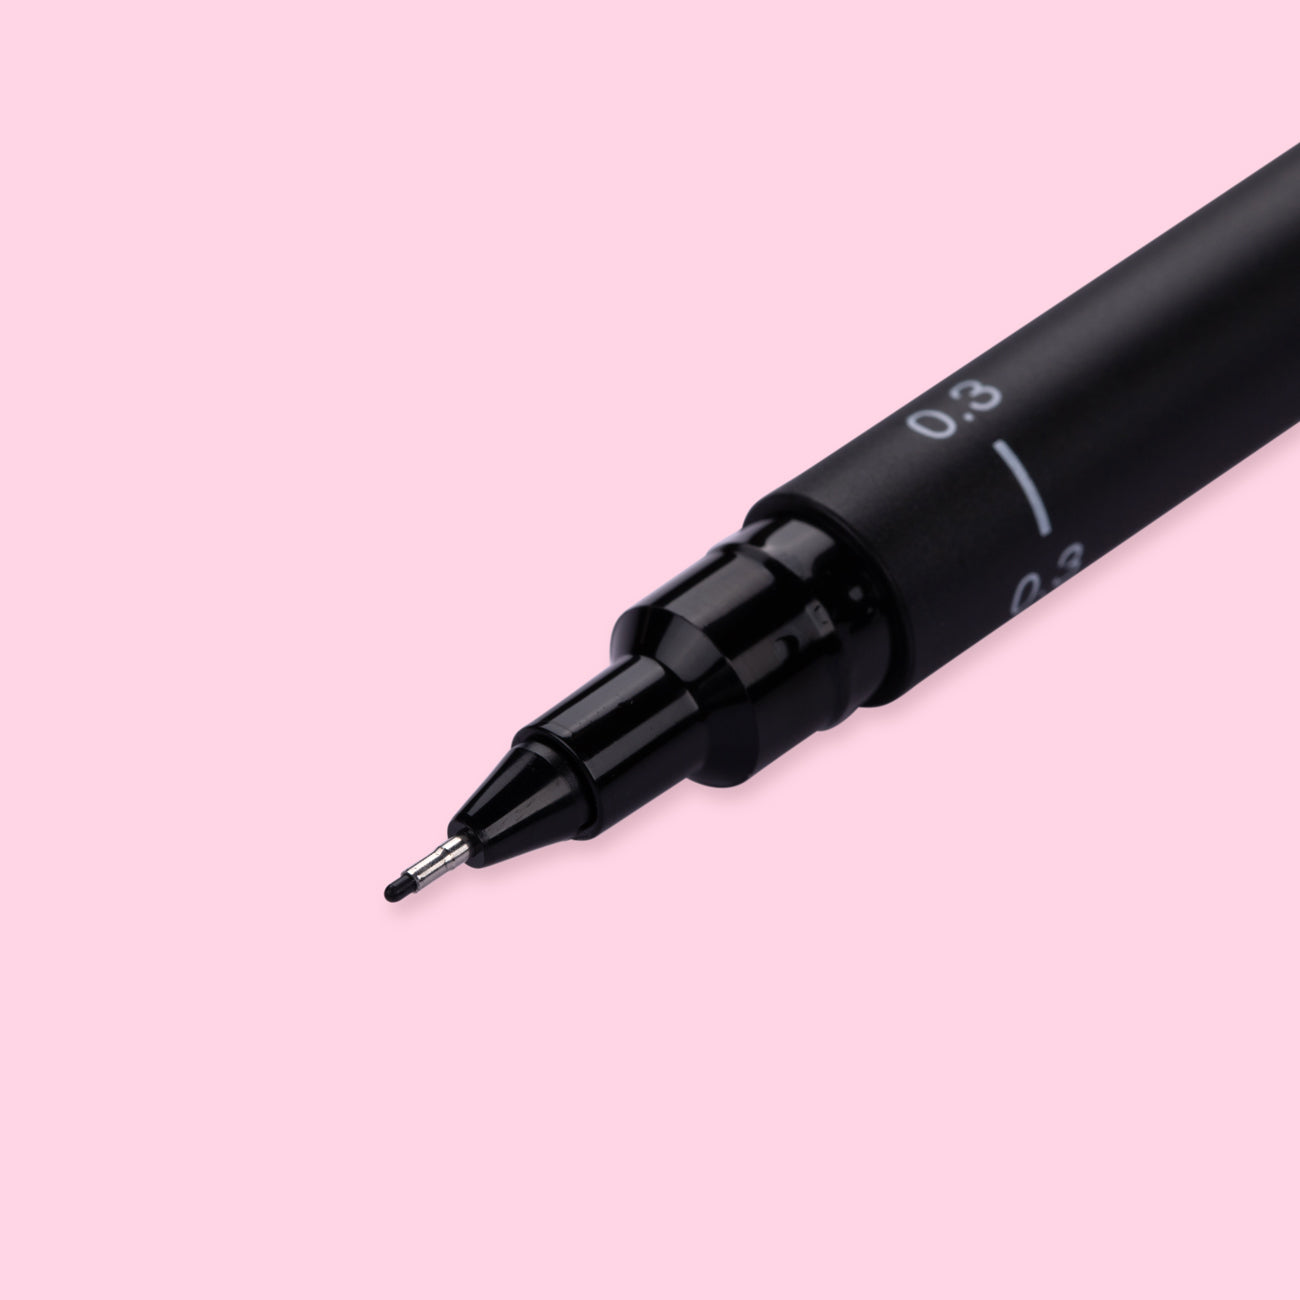 Sakura Pigma Micron Pen - Size 02 - 0.3 mm - Black